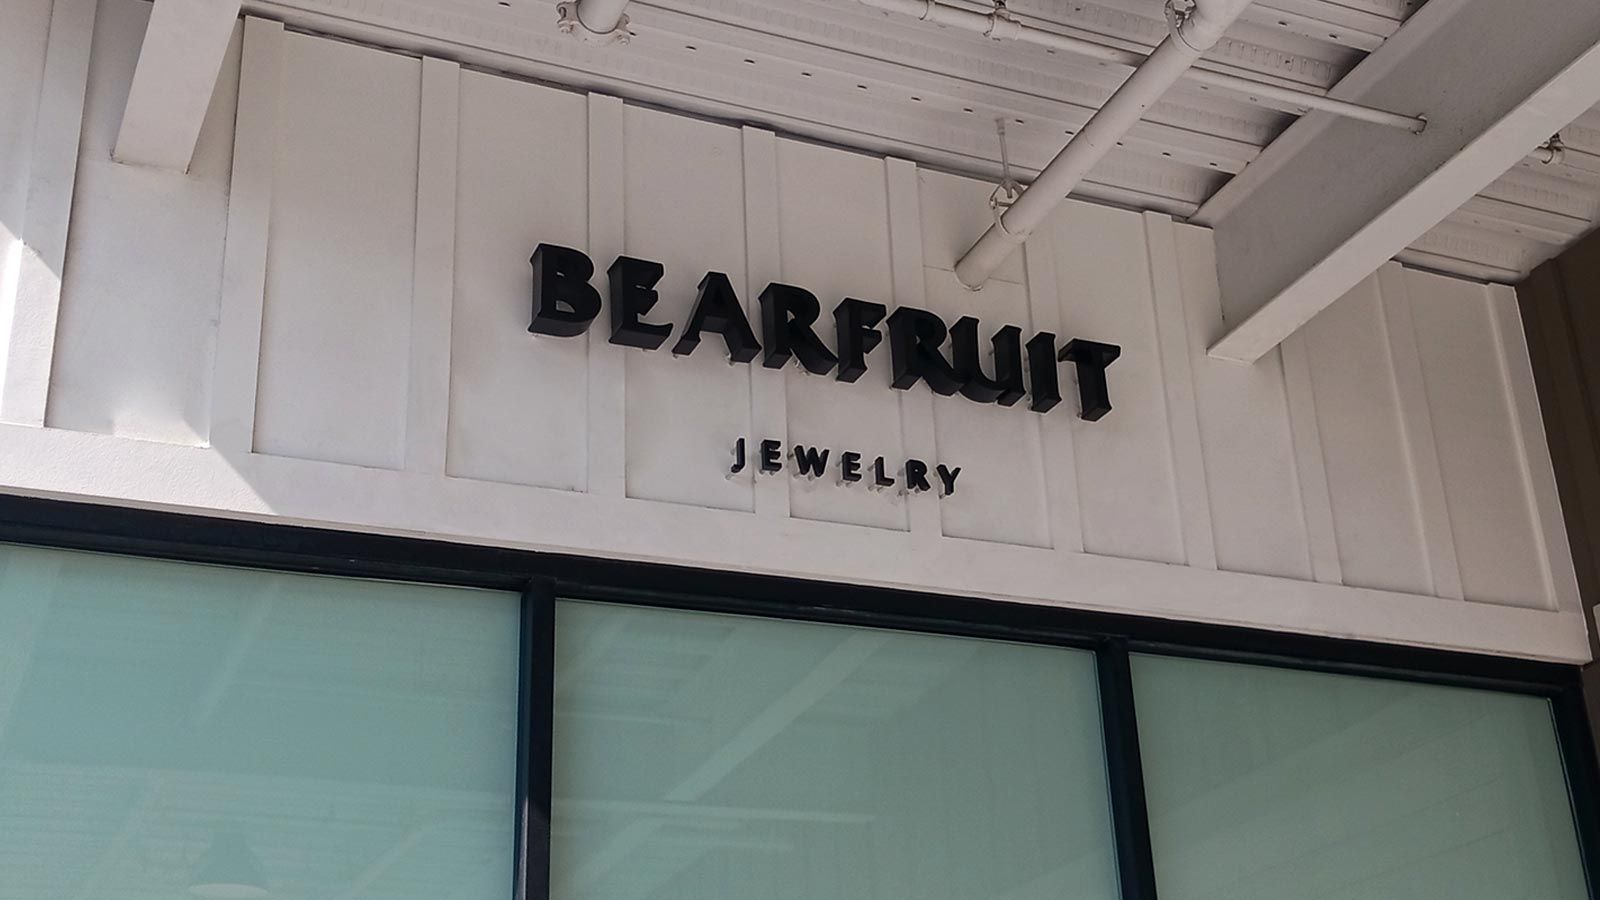 Bearfruit Jewelry 3D sign for exterior branding